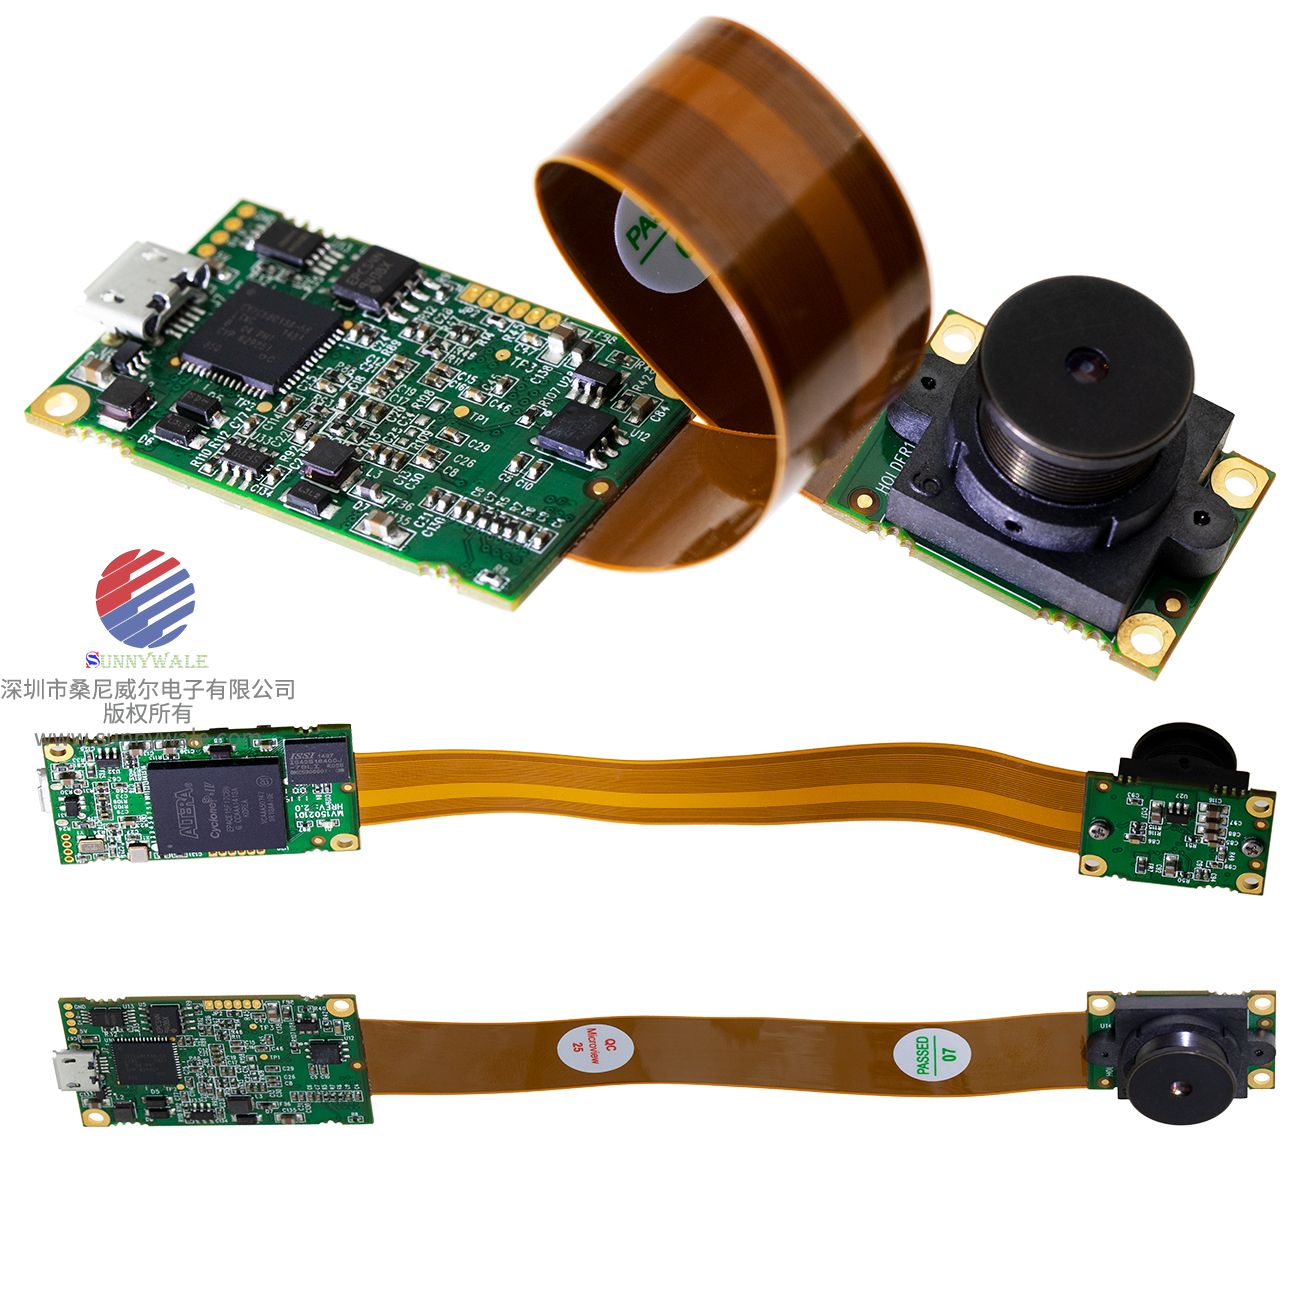 EV76C660ABT， e2v图像传感器，1.3M超高感光度sensor，全新成品摄像头模组，机械臂工业相机、手持扫描仪模组，EP4CE15F17C8N，阿特拉FPGA，现场可编程门阵列，field-programmable gate array，爱尔创3D扫描仪Upscan-xx摄像头，爱尔创3D扫描仪驱动程序，CY7C68013 USB2.0驱动程序下载，带算力智能摄像头模组